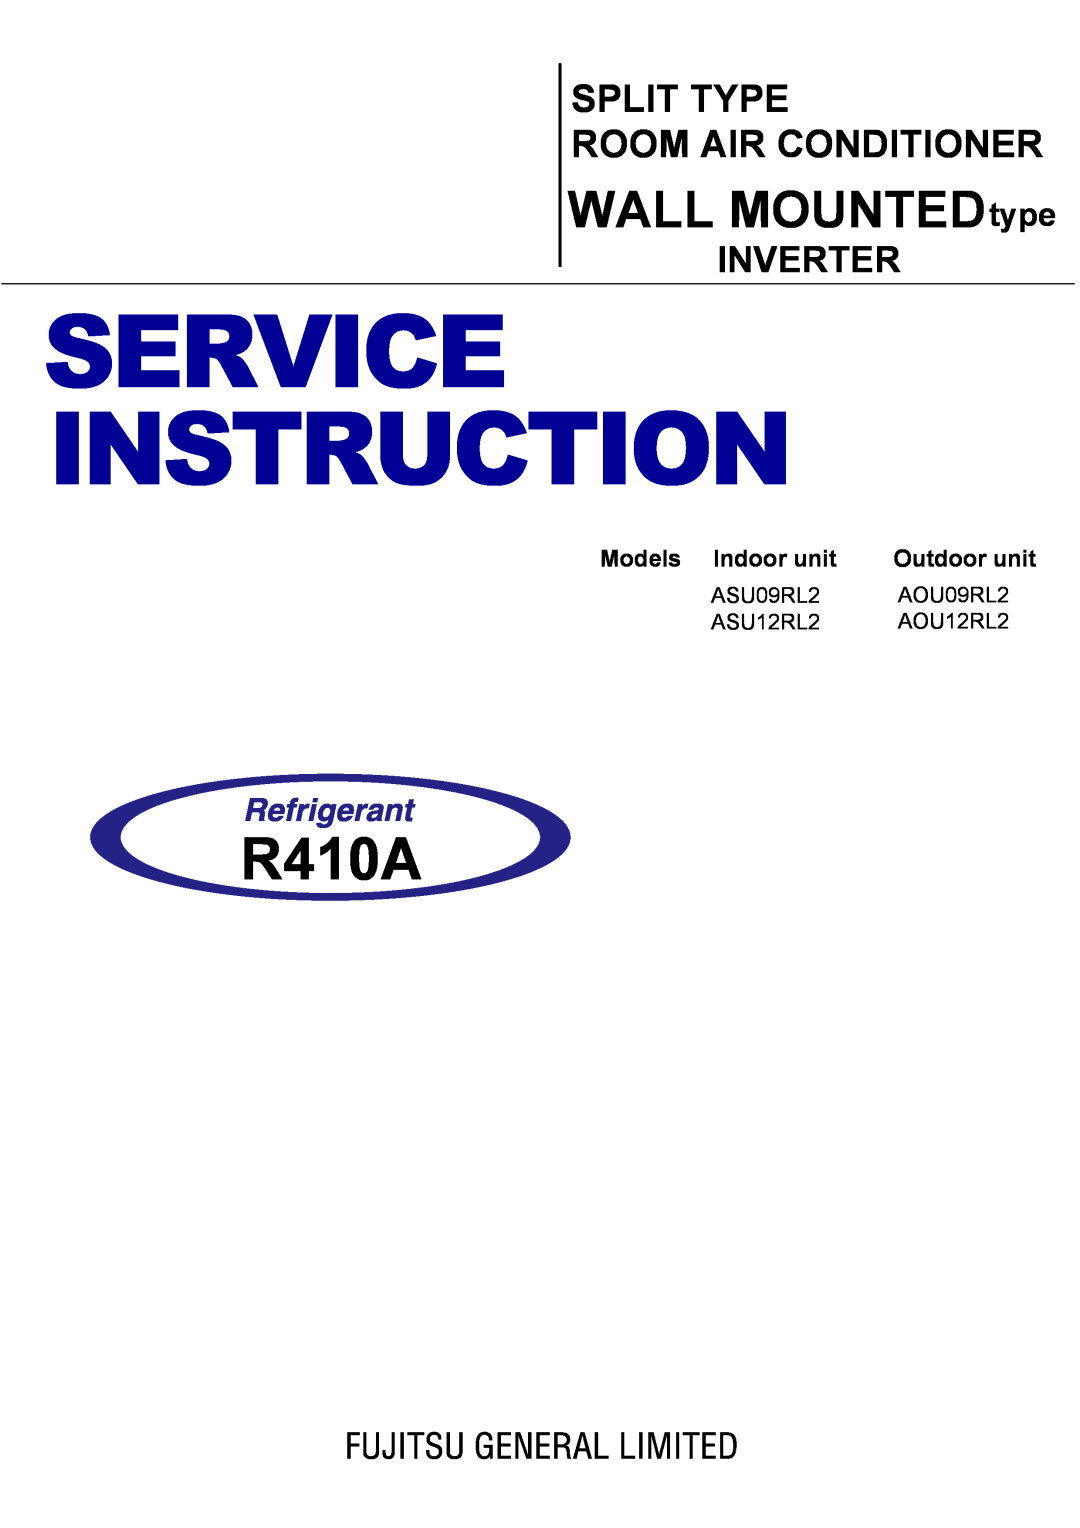 Fujitsu AOU12RL2, ASU12RL2 manual Inverter, Service Instruction, R410A, WALL MOUNTEDtype, Split Type Room Air Conditioner 